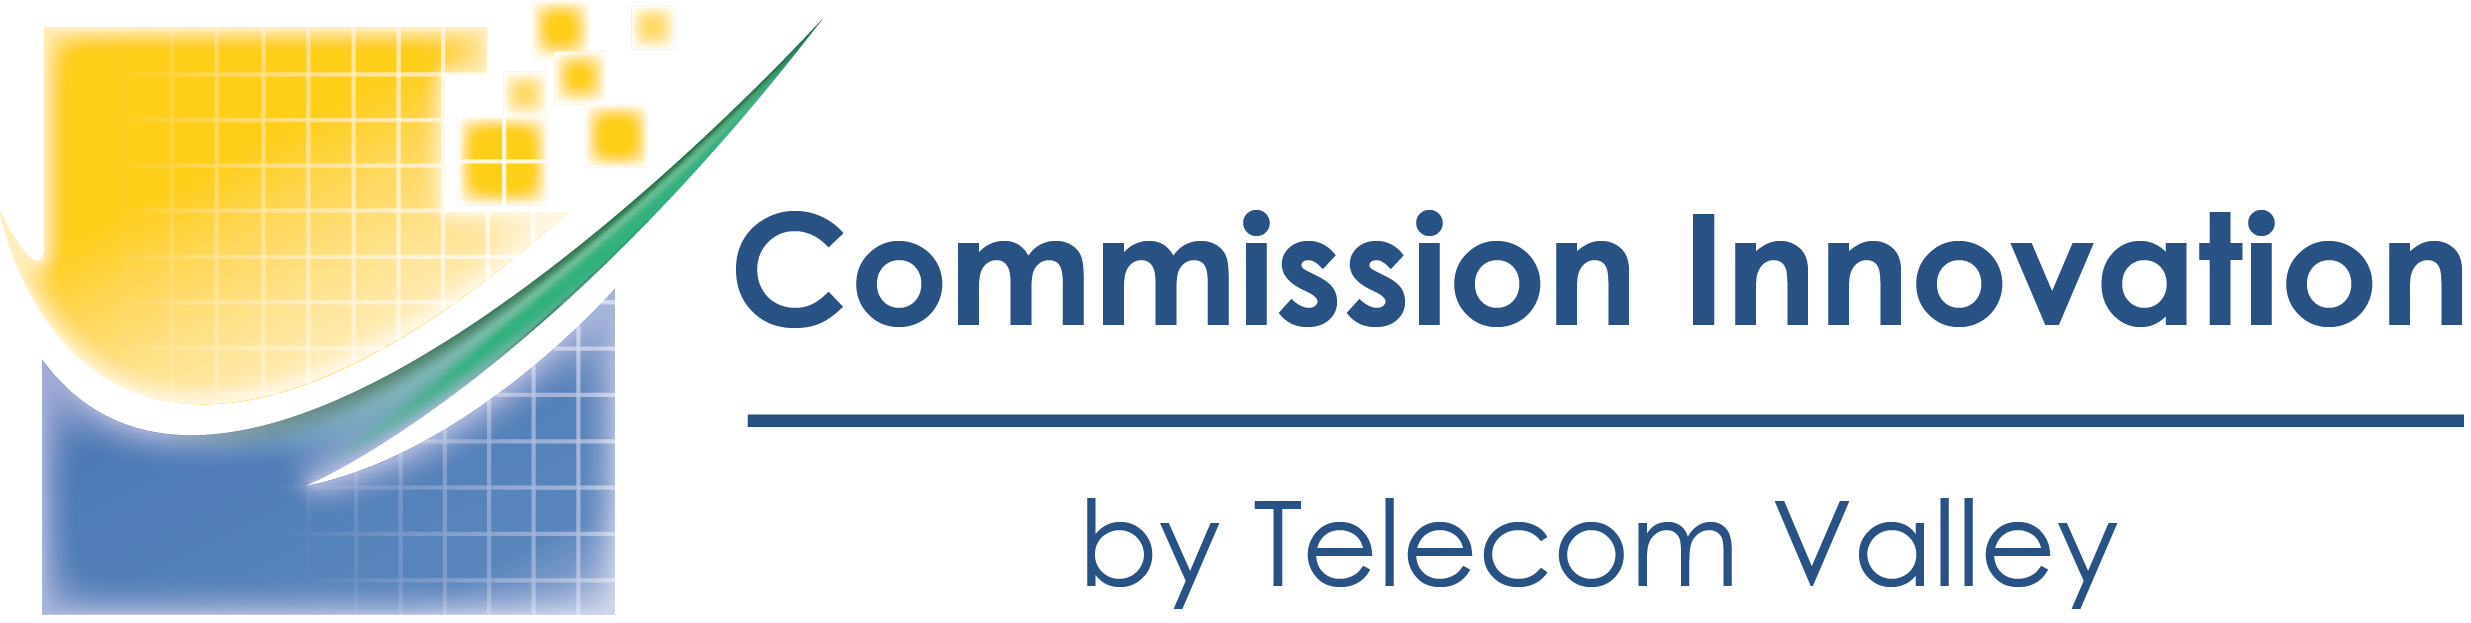 23 juin 2016 – Commission Innovation